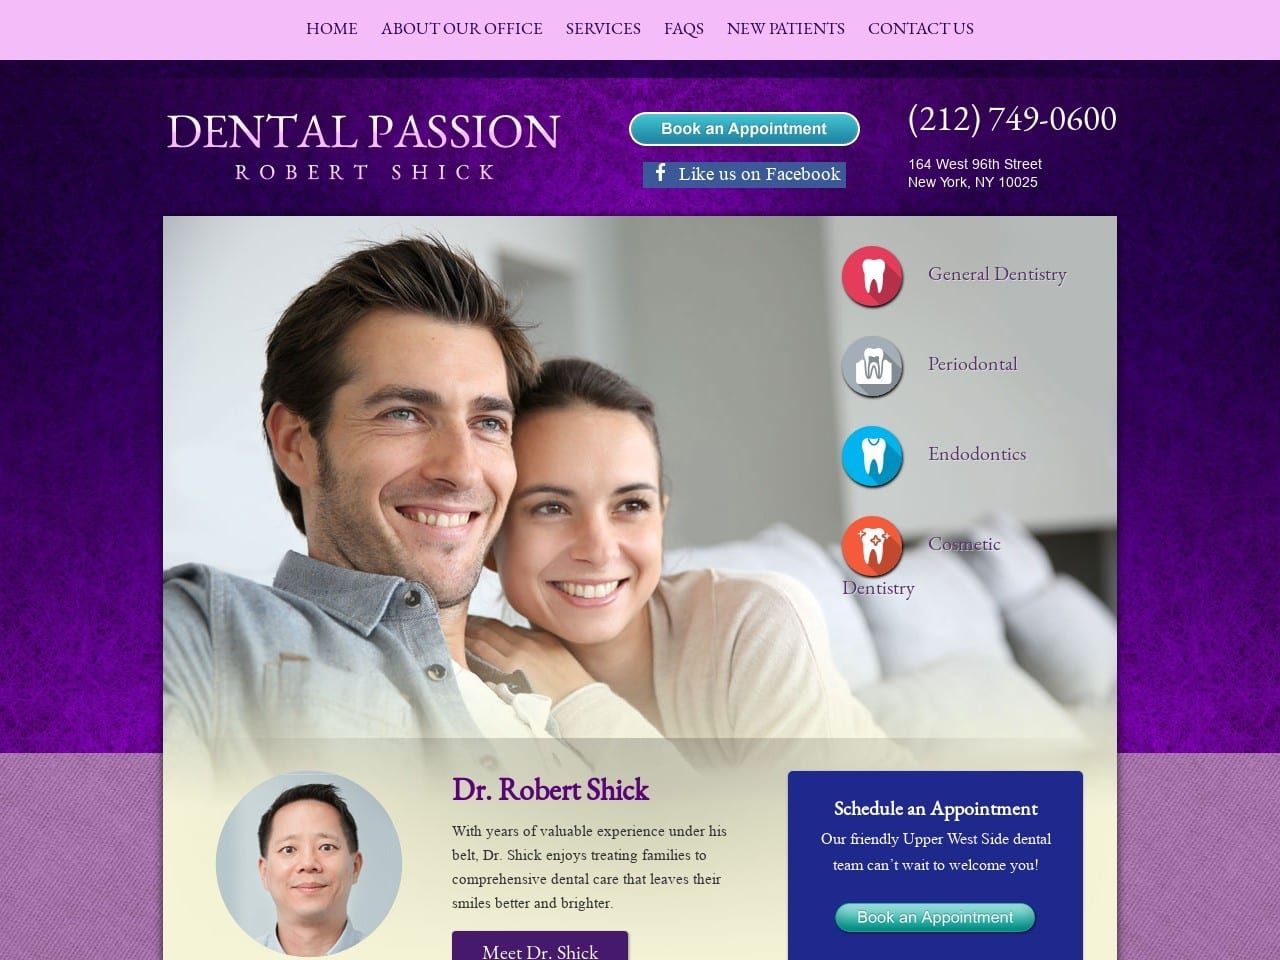 Dental Passion Website Screenshot from dentalpassion.com